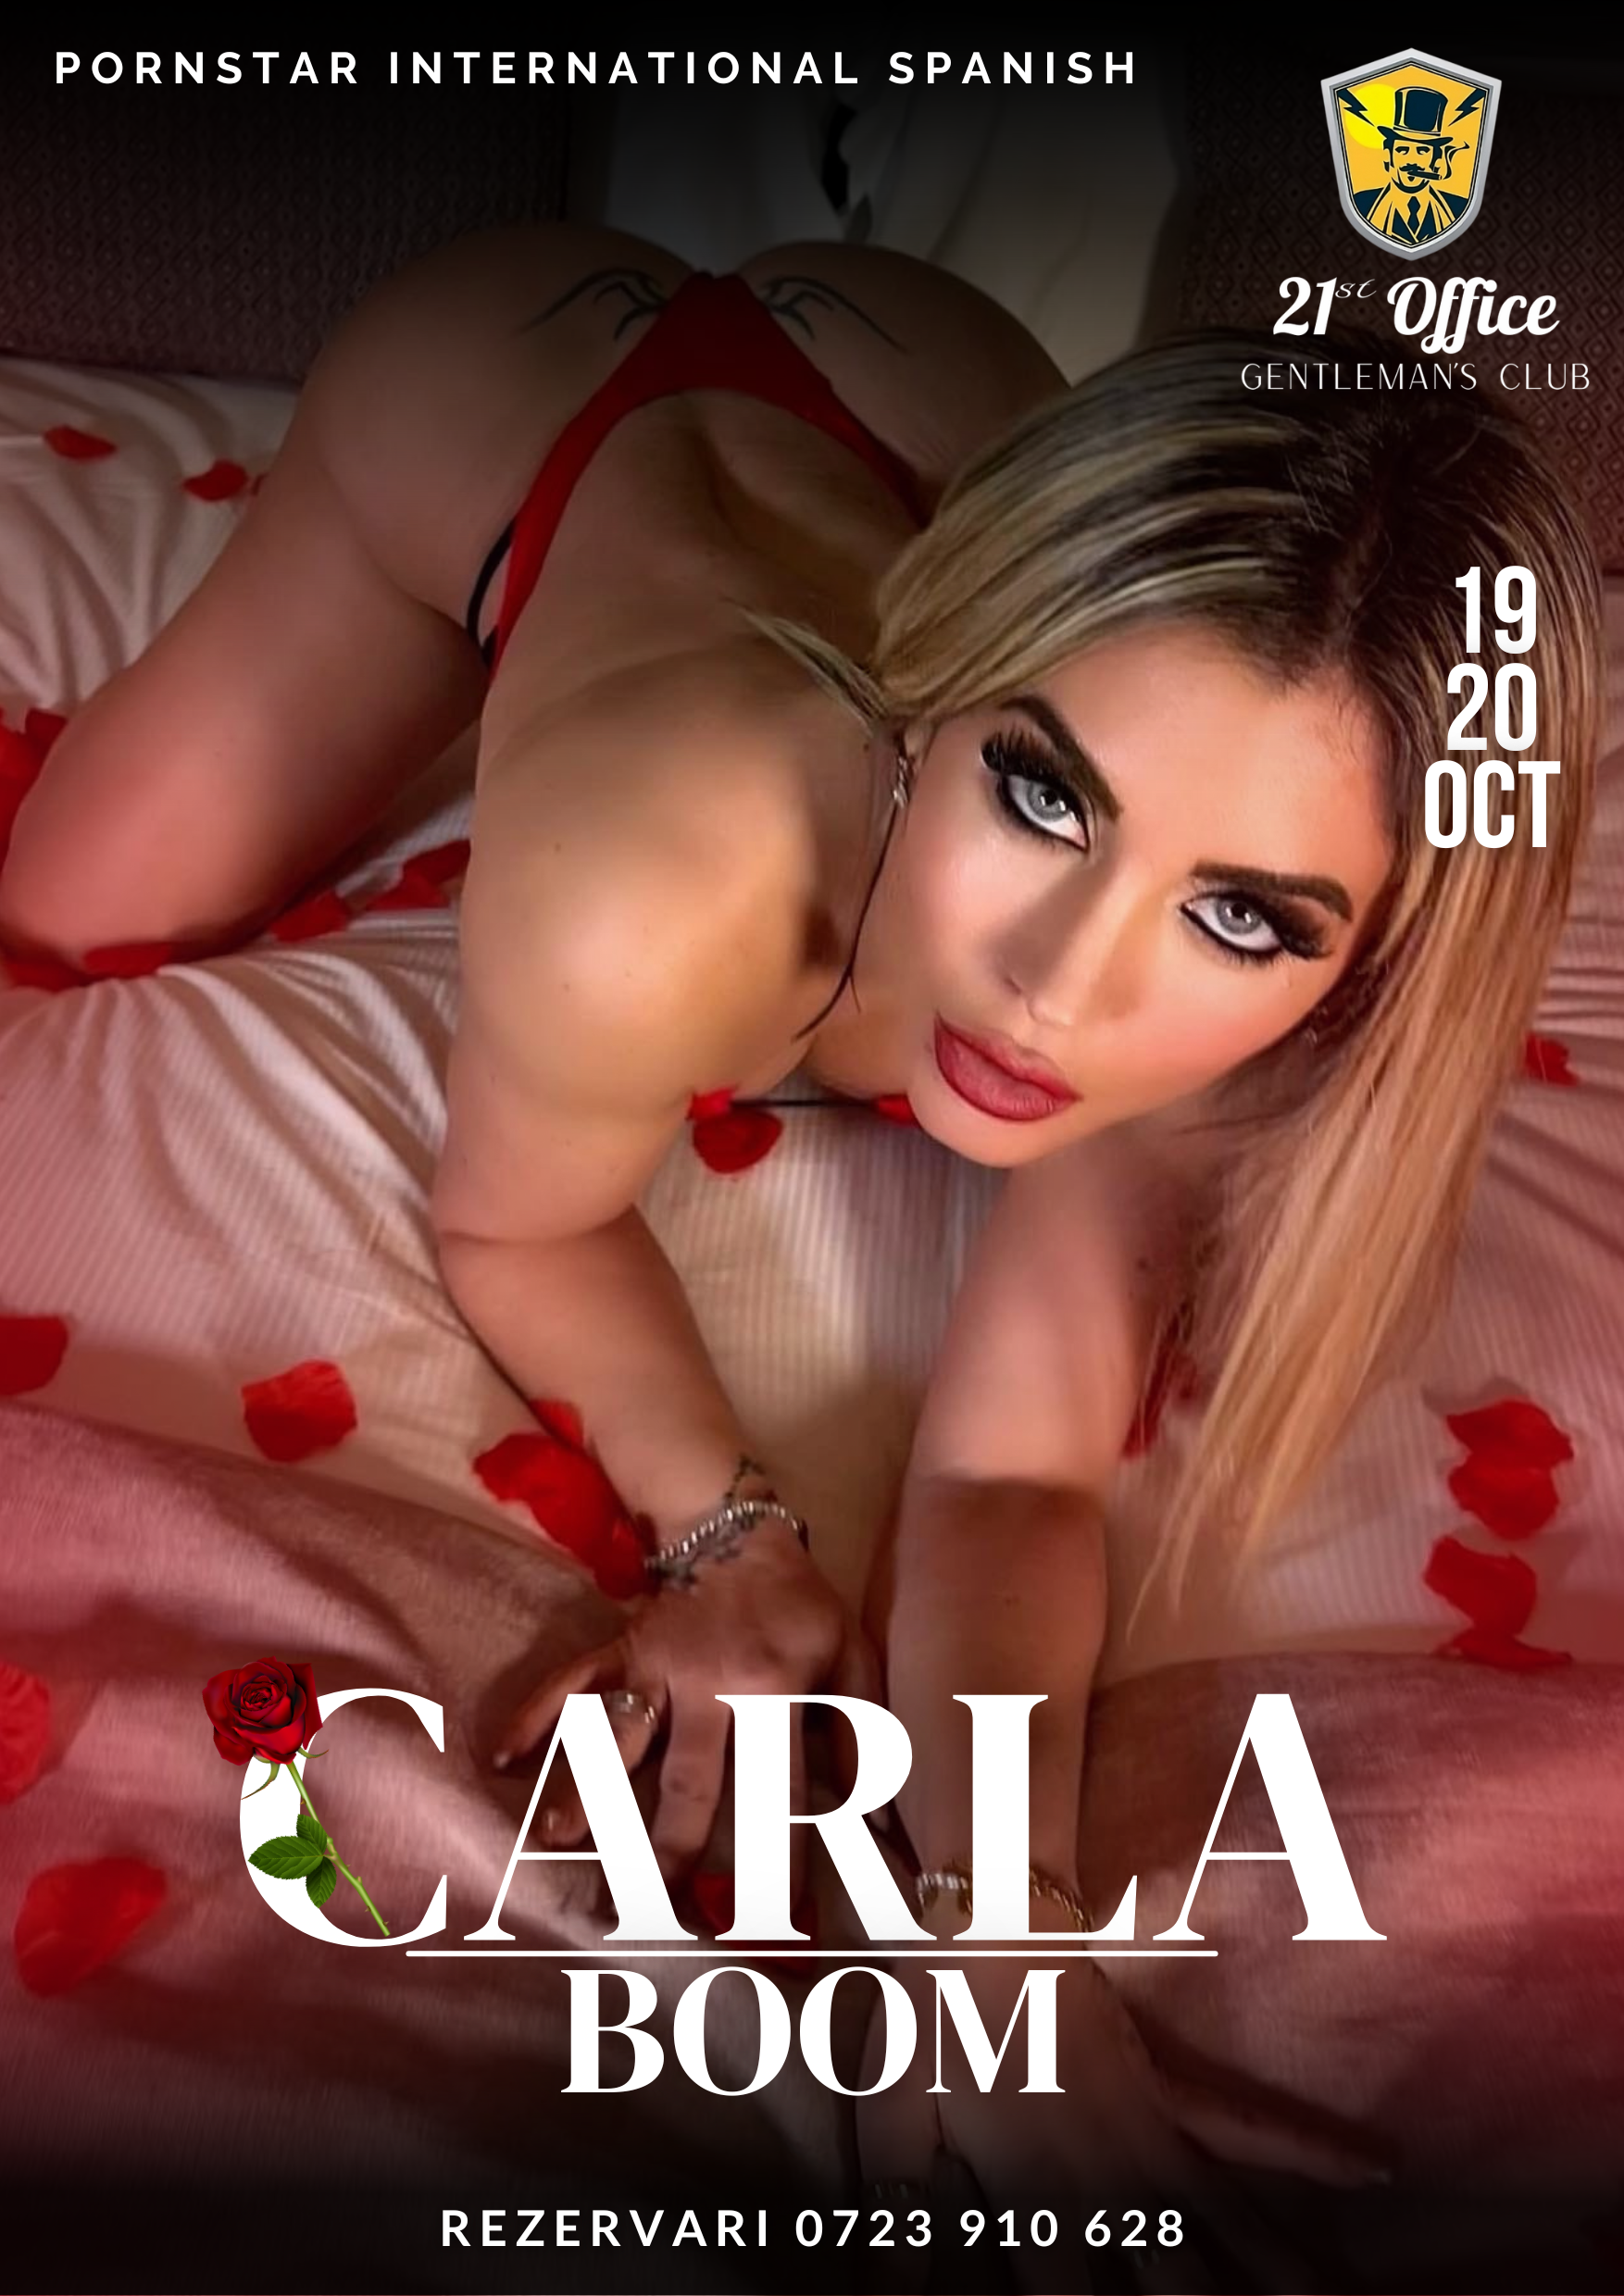 Show de striptease intretinut de pornstarul spaniol Carla Boom pe 19 si 20 octombrie la 21 Office Gentlemans Club